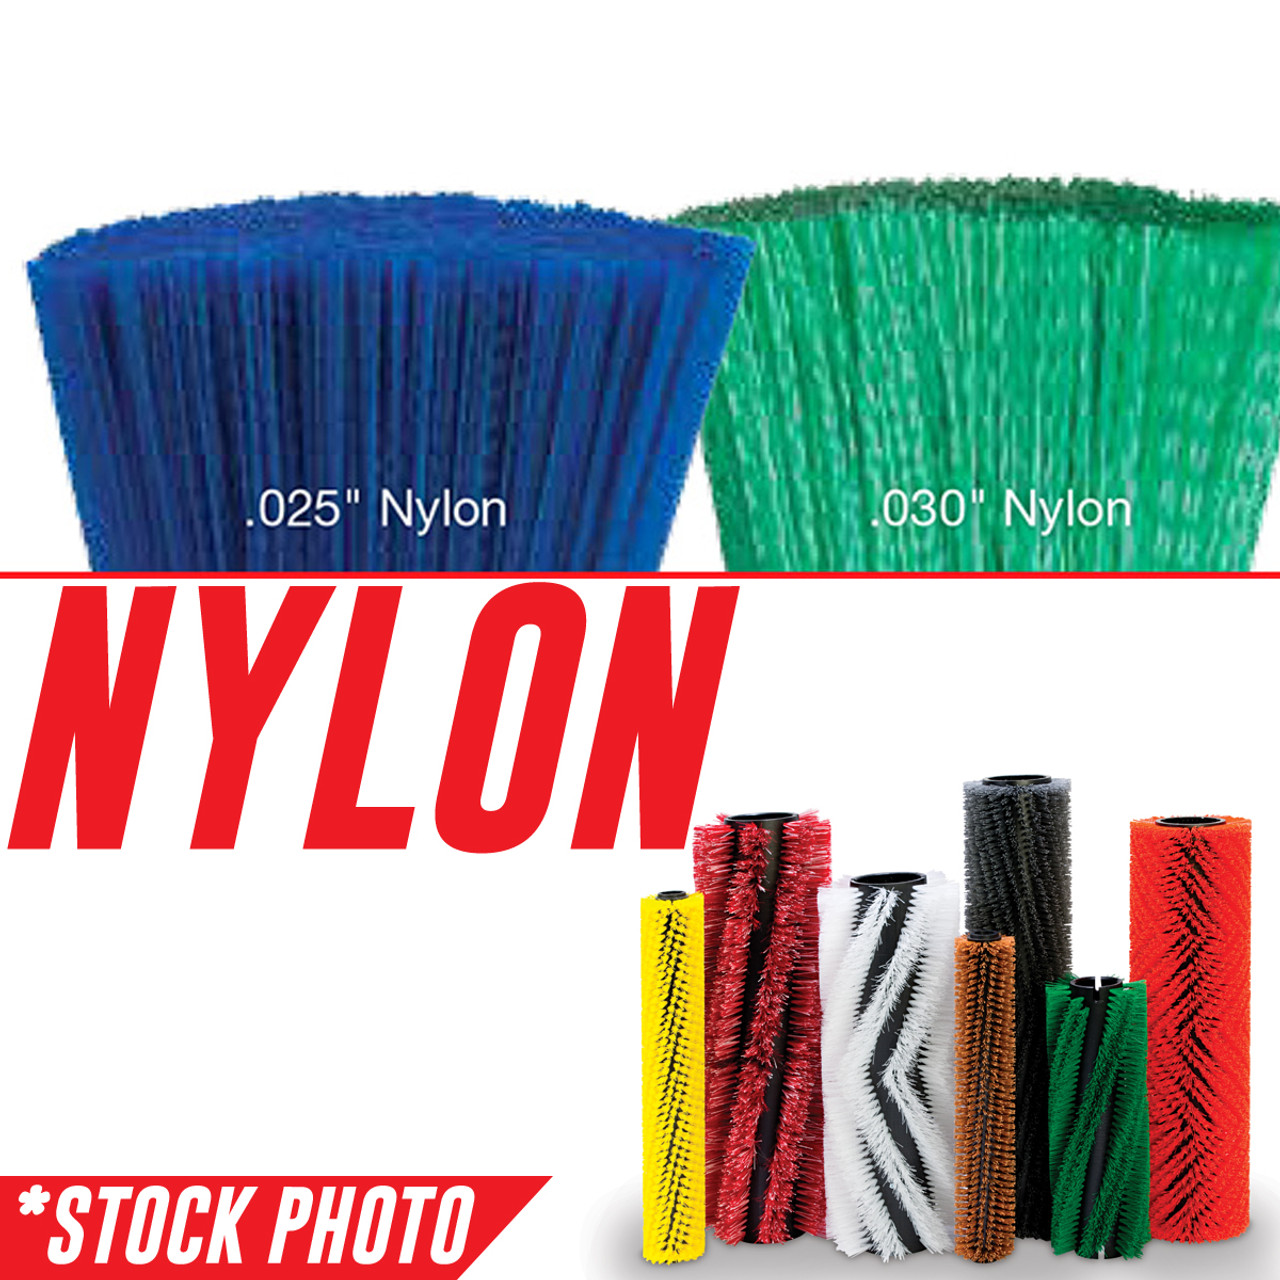 56413434: 45" Cylindrical Brush 18 Single Row Soft Nylon fits Advance-Nilfisk Models Condor 4530, SC6500 45